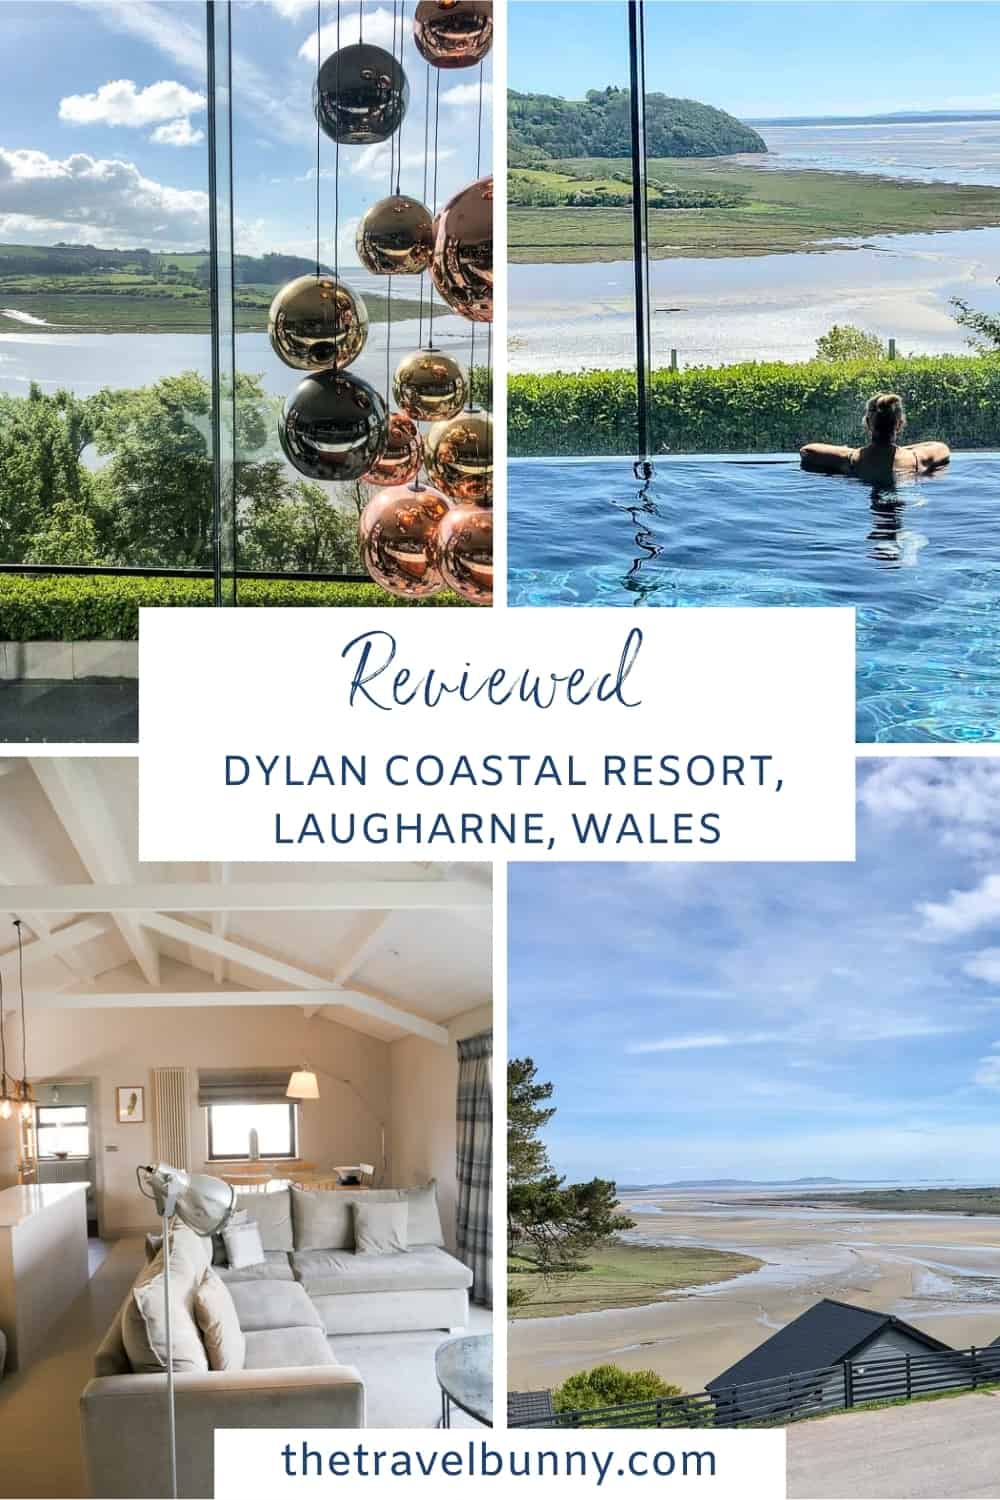 Dylan Coastal Resort, Laugharne, Wales Review